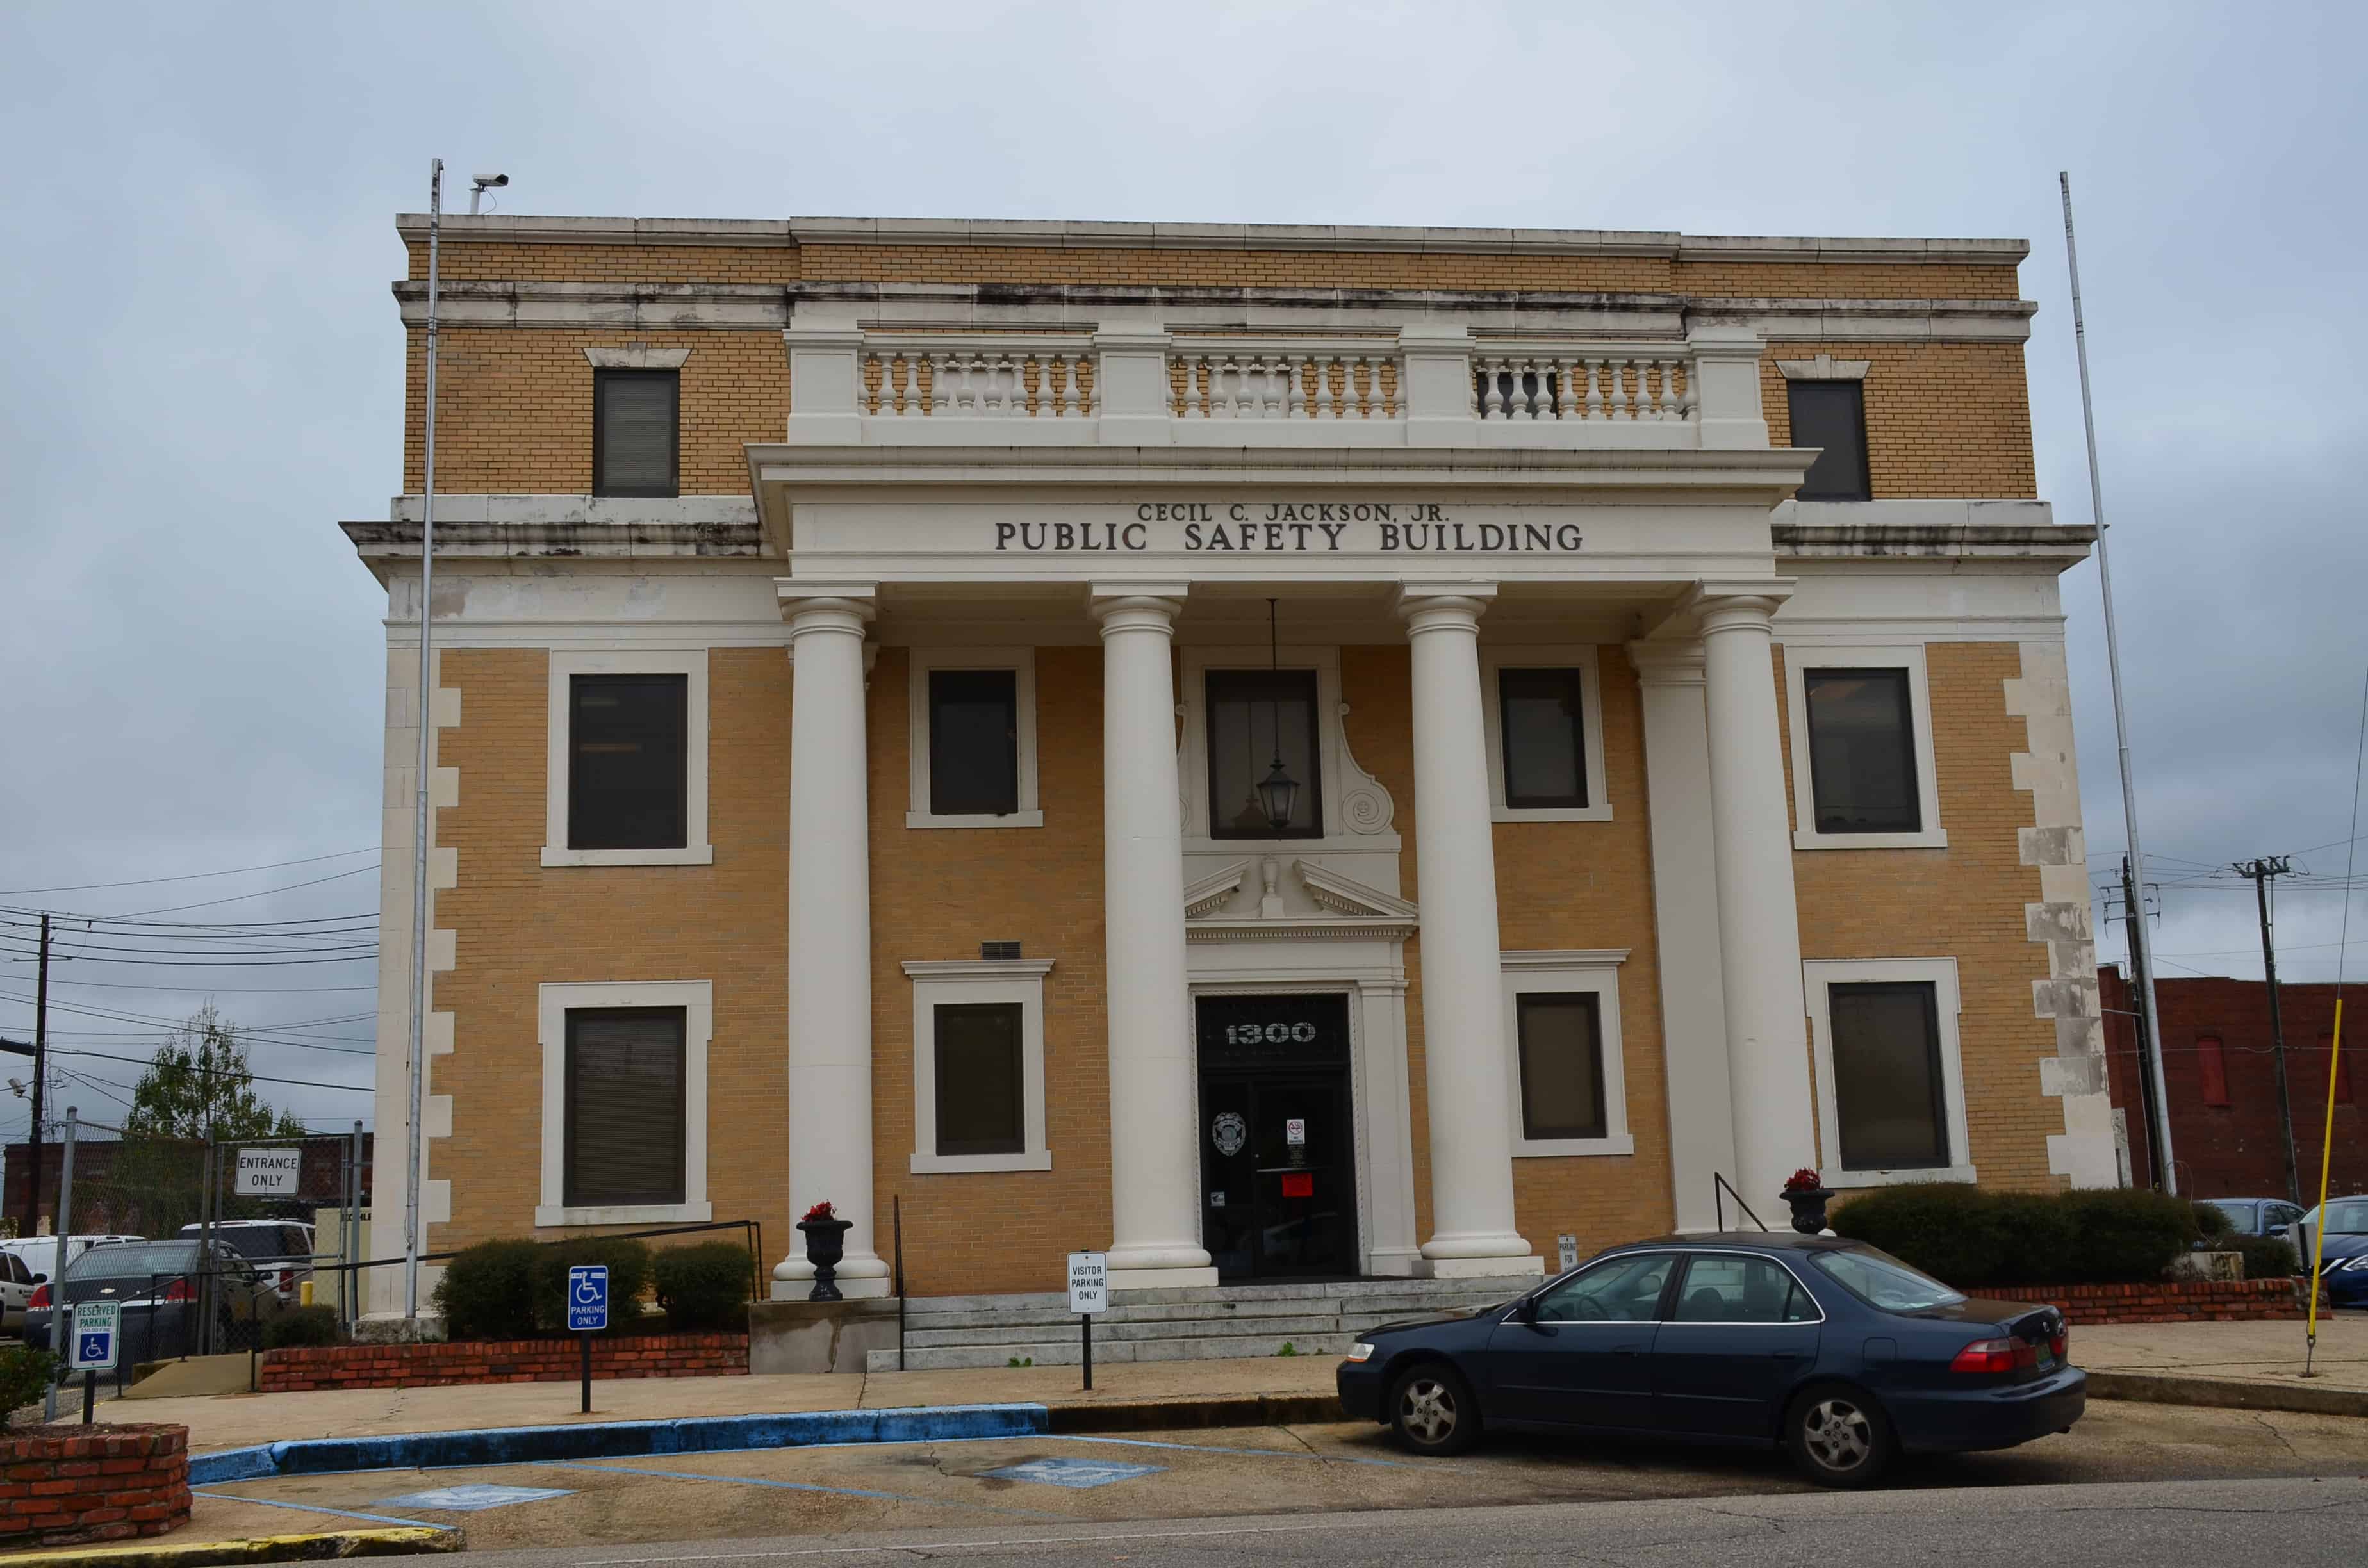 Public Safety Building in Selma, Alabama